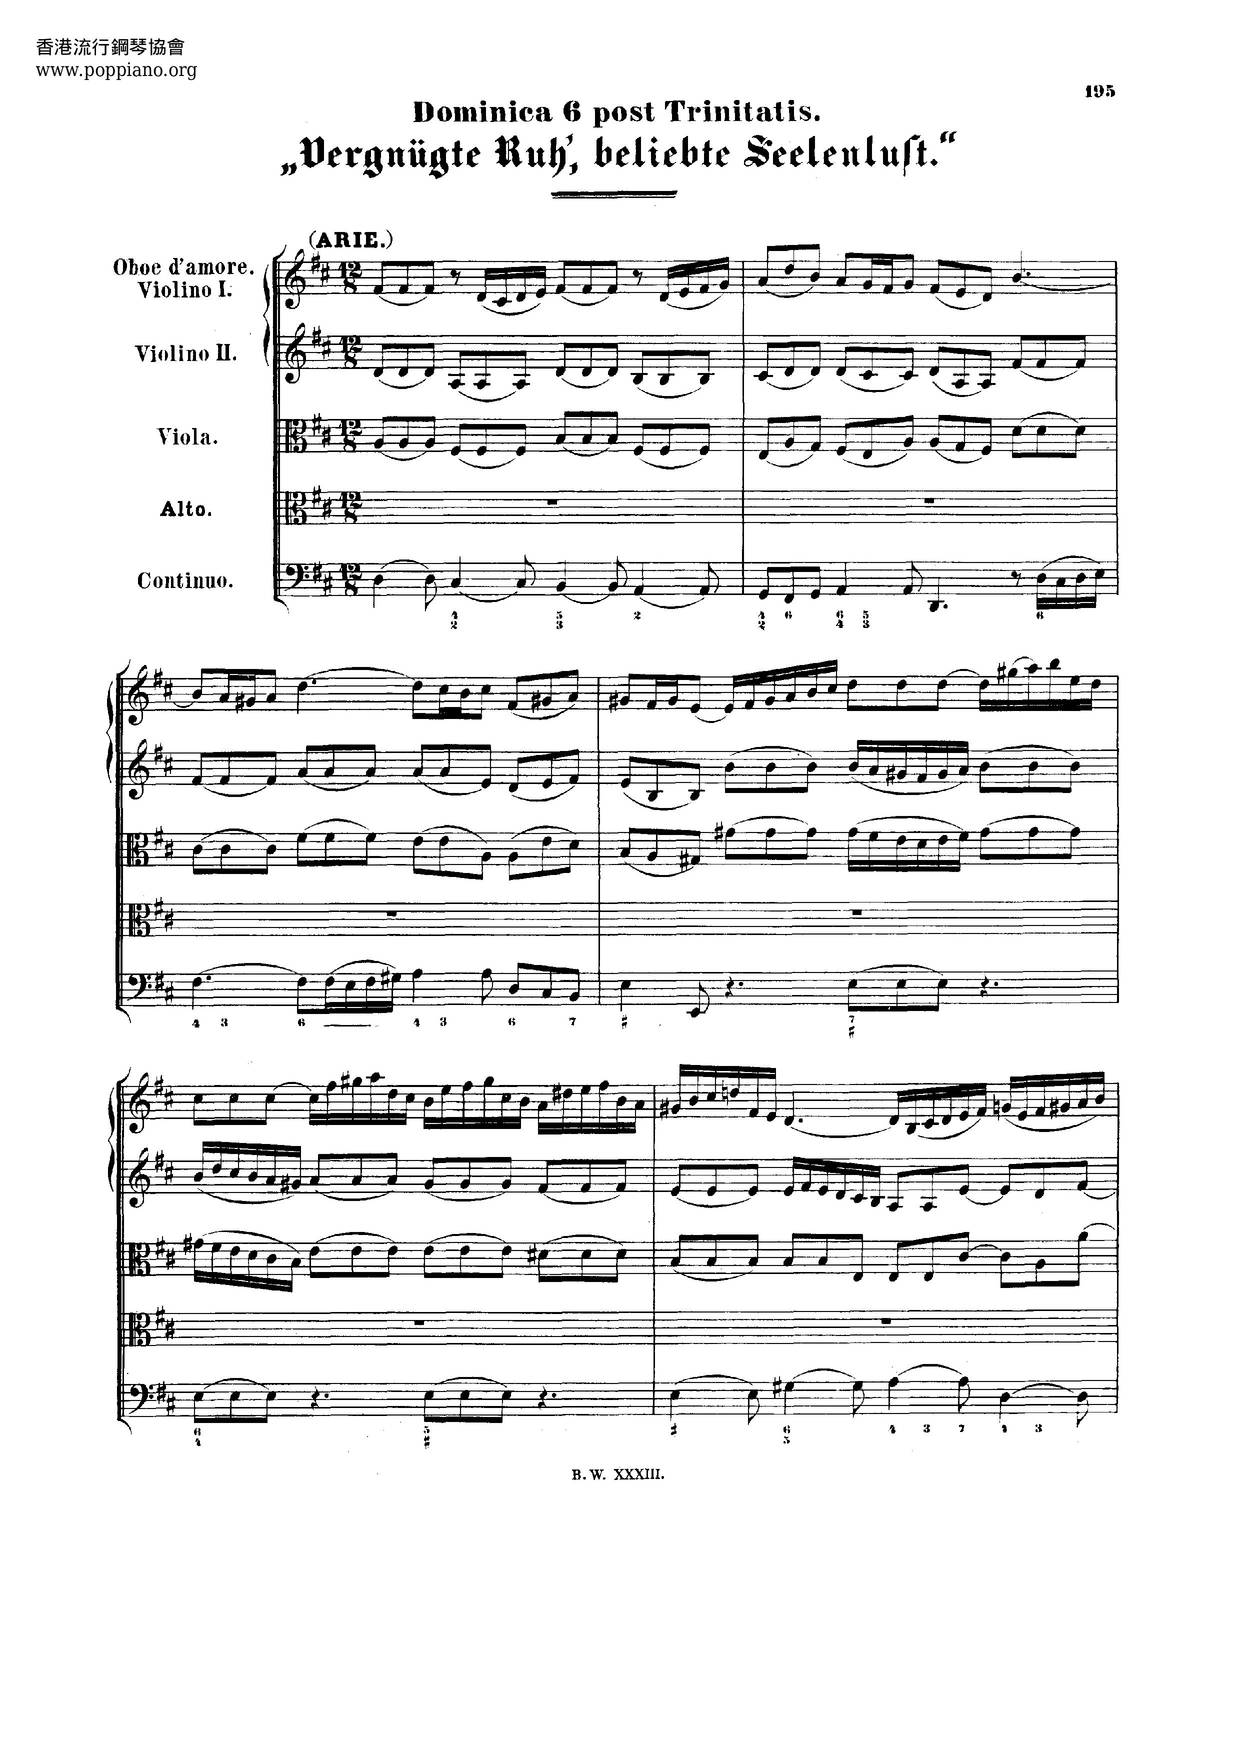 Vergnügte Ruh, Beliebte Seelenlust, BWV 170 Score